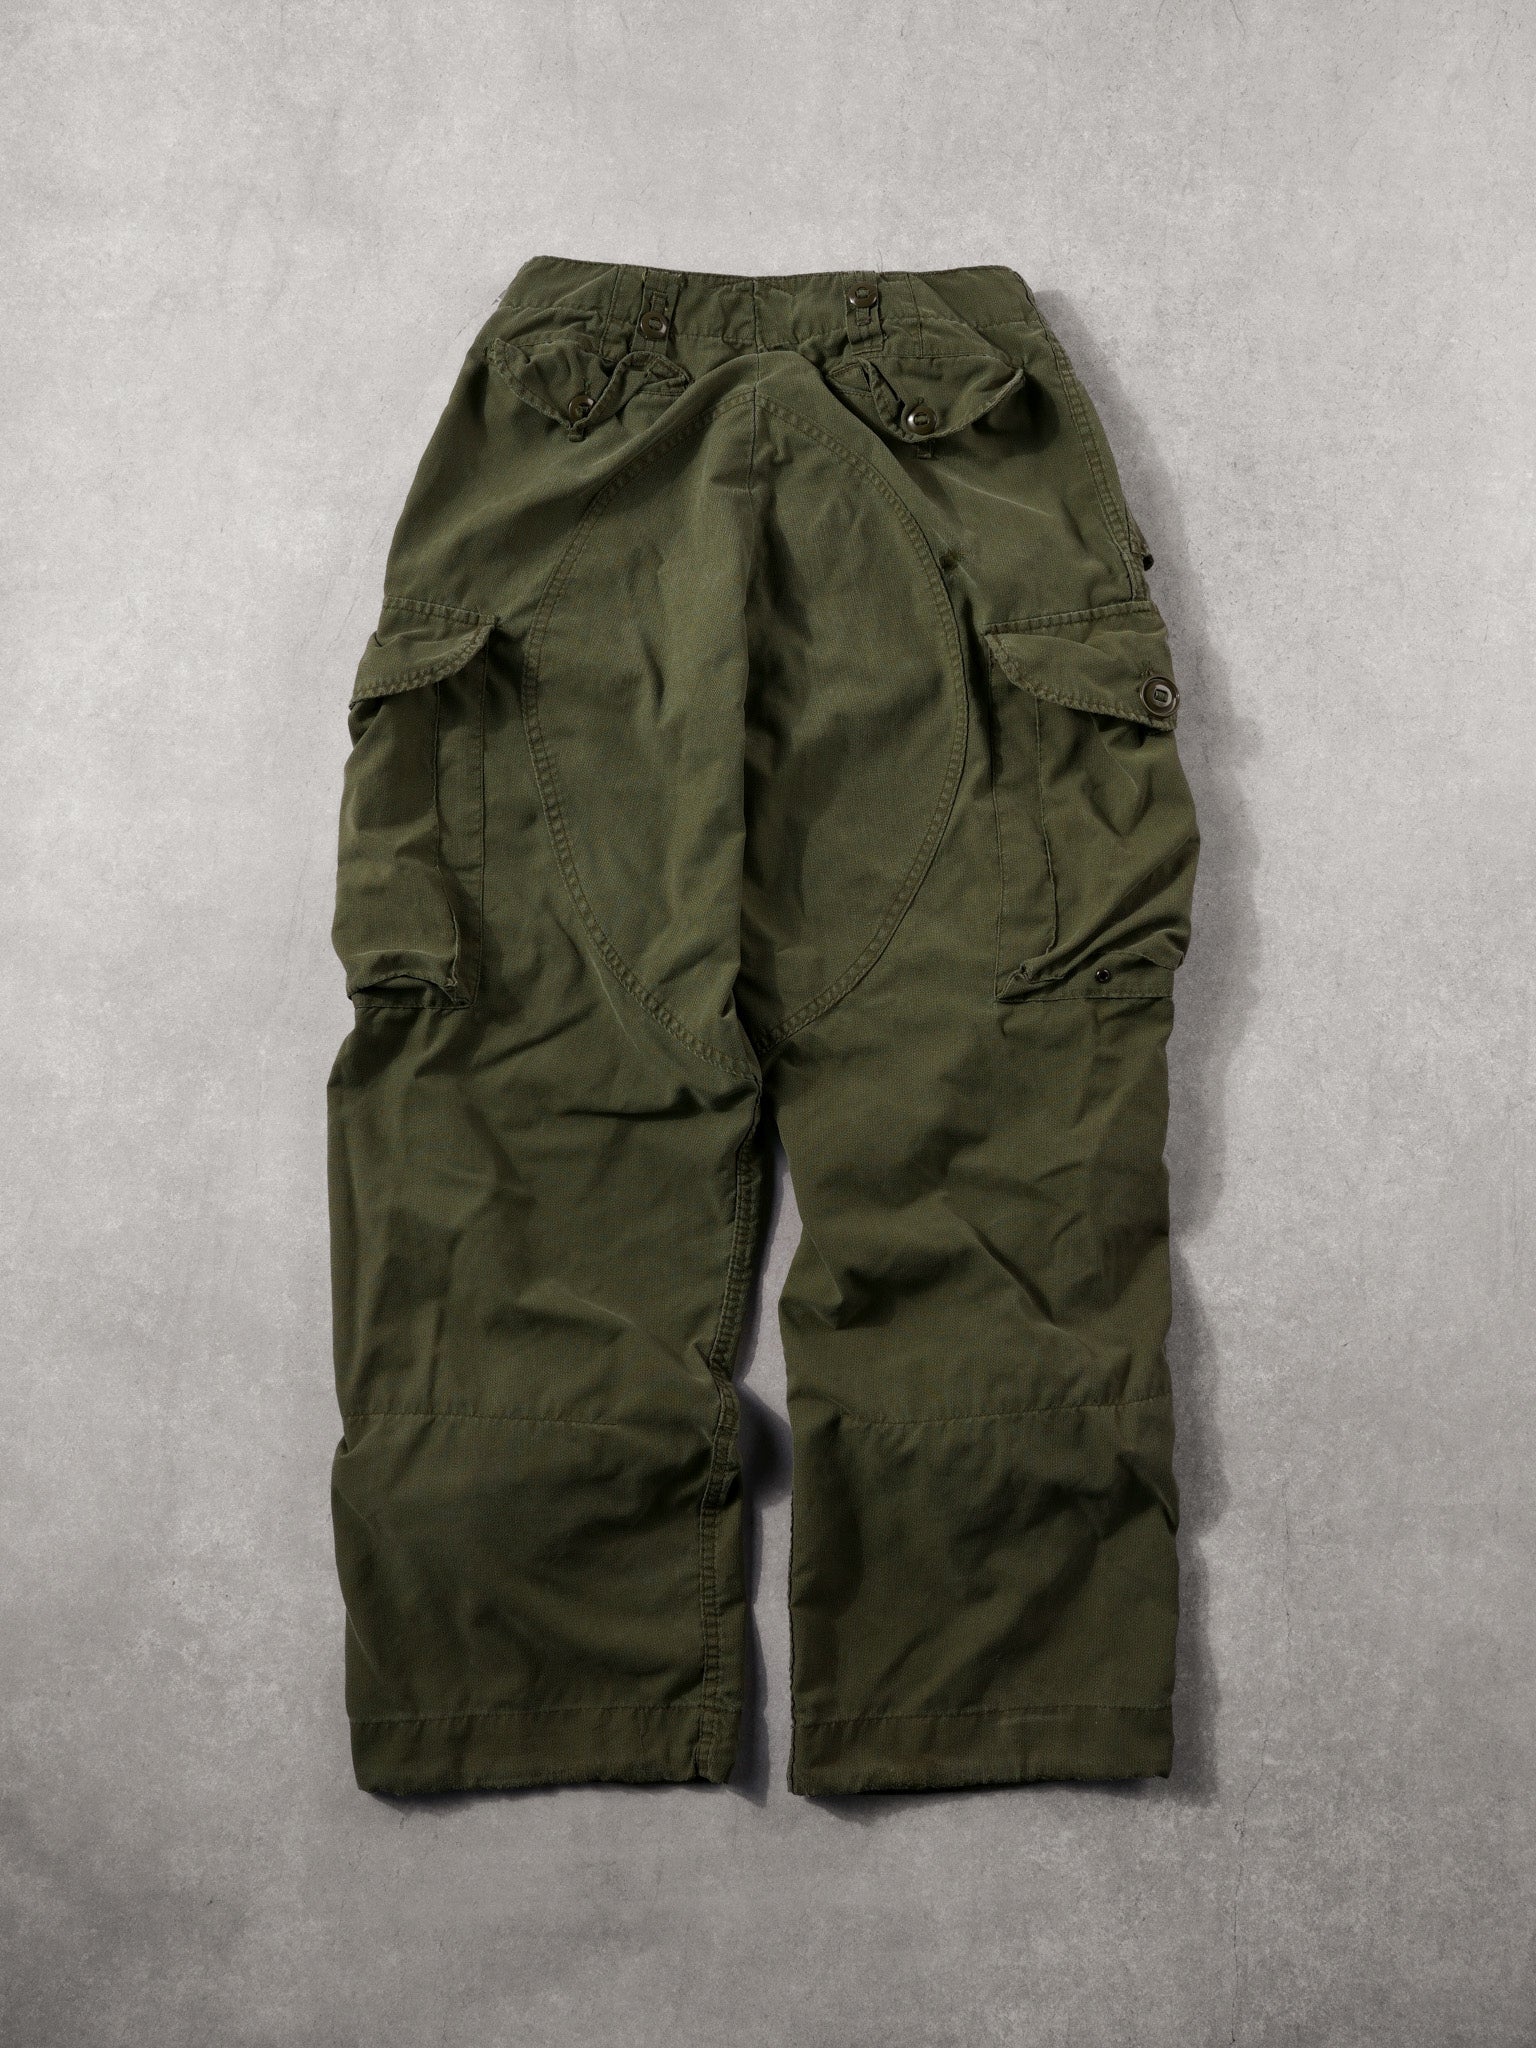 Vintage 80s Green Army Parachute Pants (32x28)